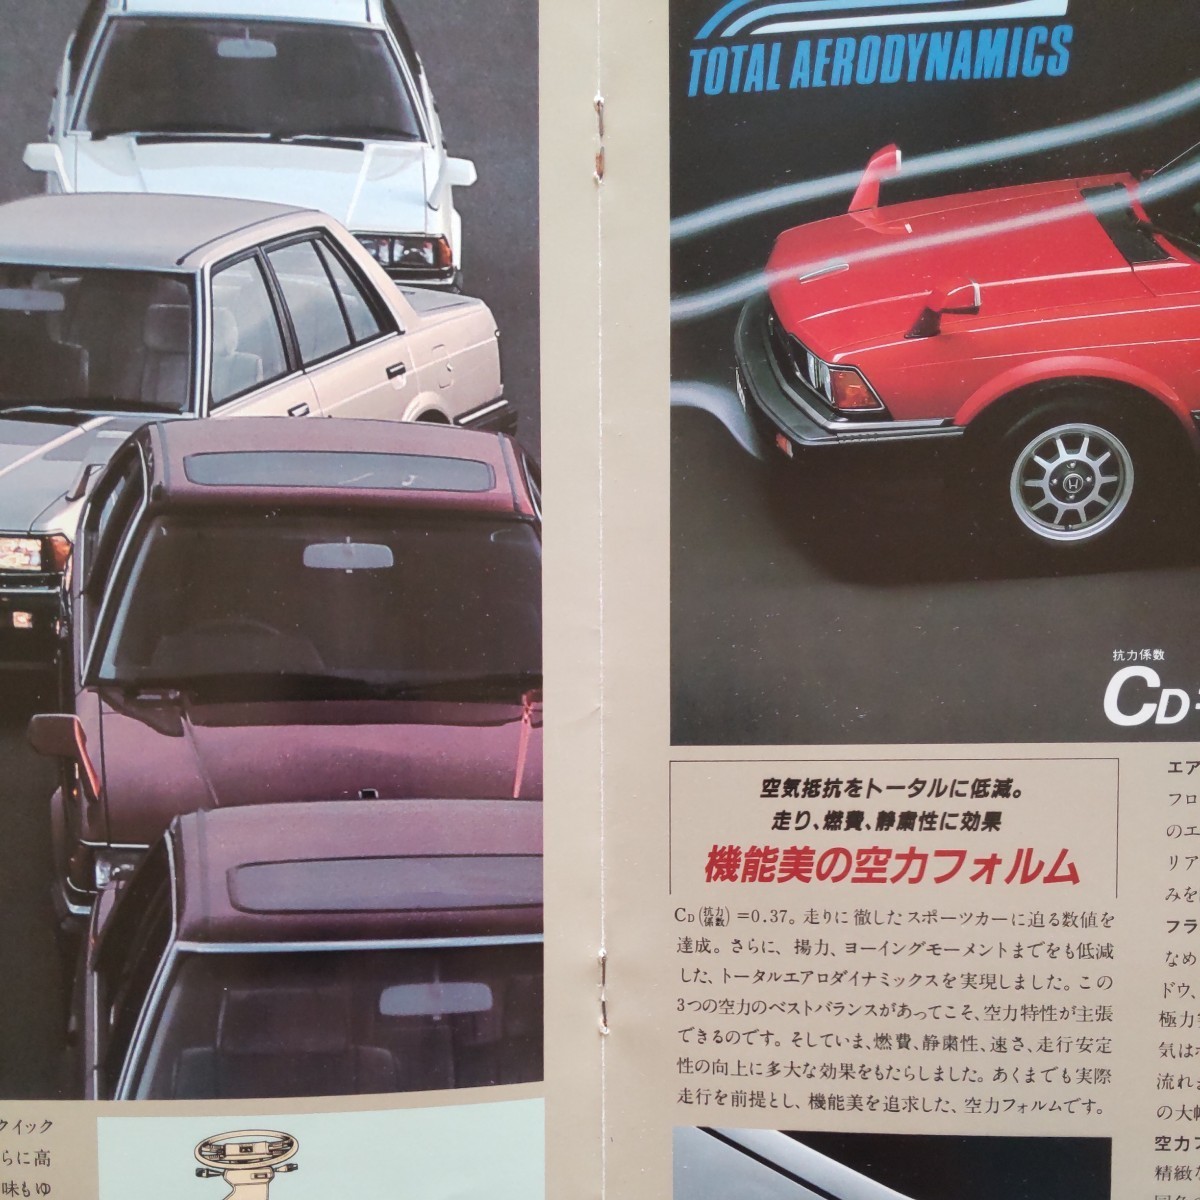  Honda Vigor каталог 1981 год Showa 56 год старый машина HONDA VIGOR